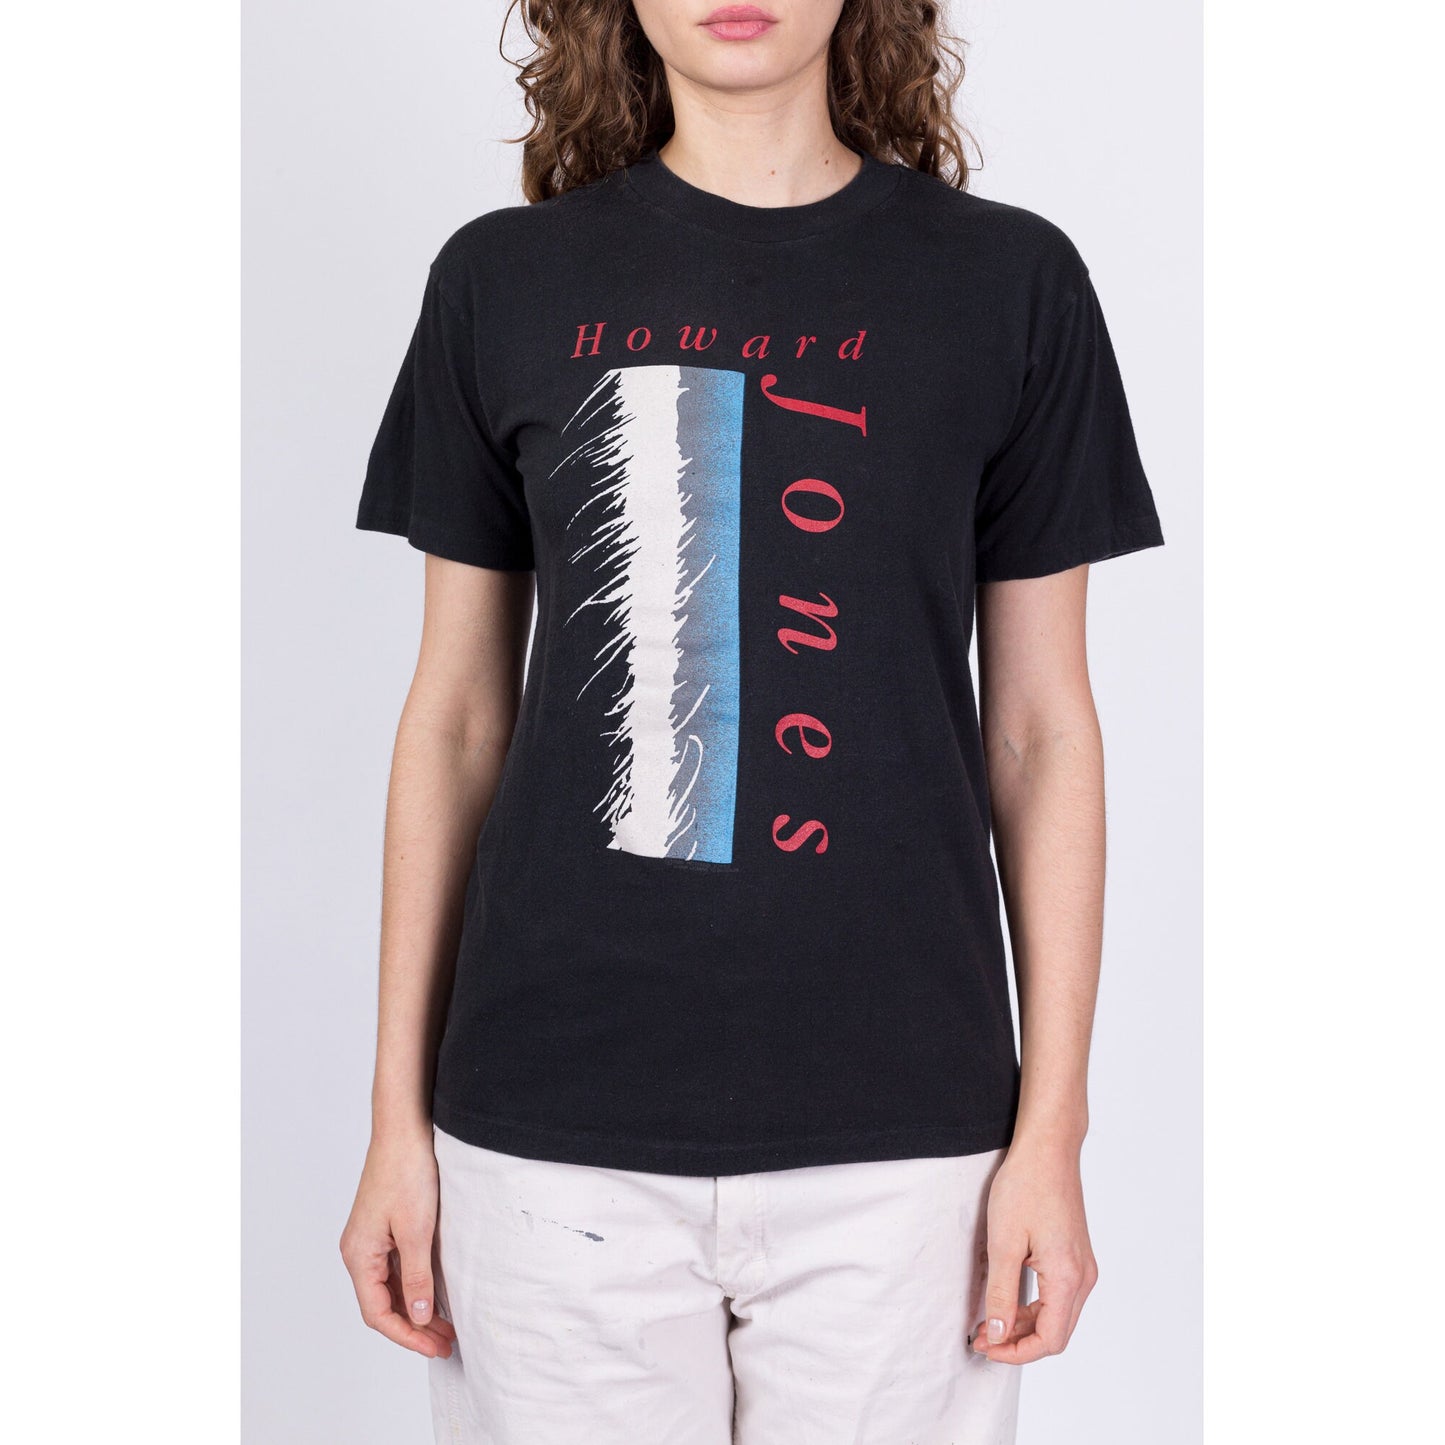 1989 Howard Jones Tour T Shirt - Men's Small, Women's Medium 